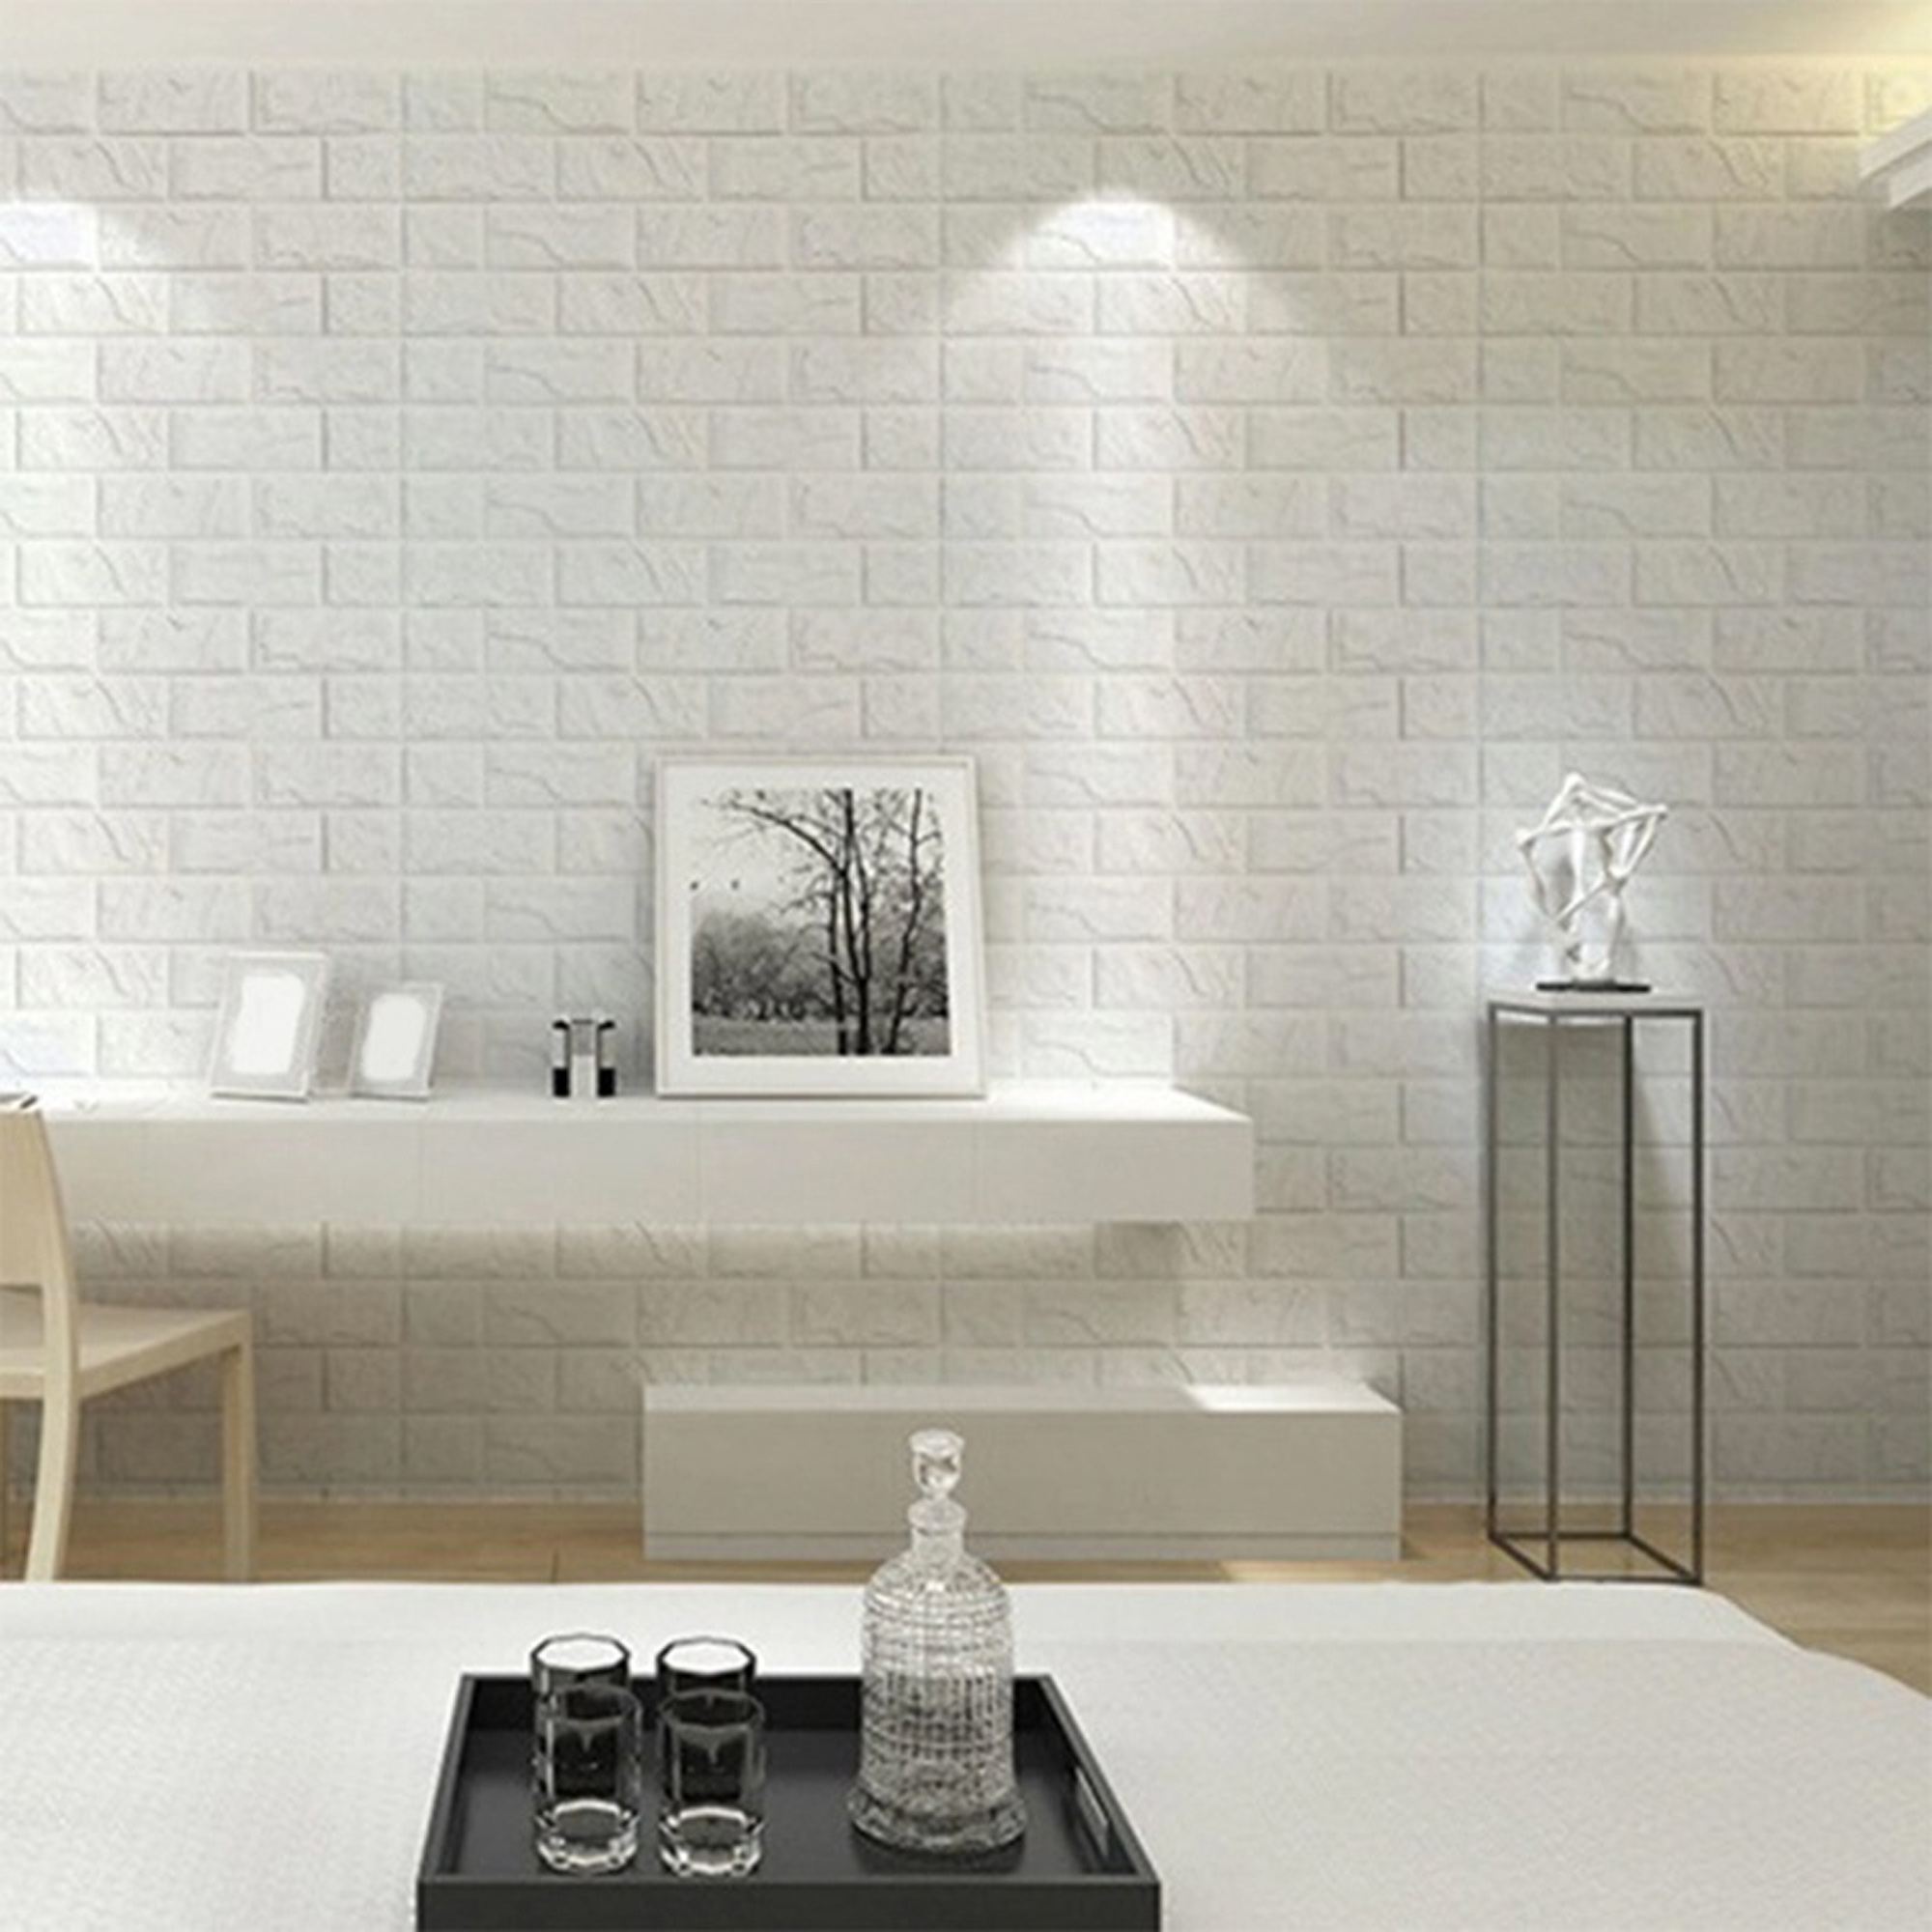 1 Pc 12x24 inch 3D Brick Wall Panels, 3D Foam Panels Stone Brick Ceramic Wall Stickers Self-adhesive Wallpaper Decor - image 2 of 8